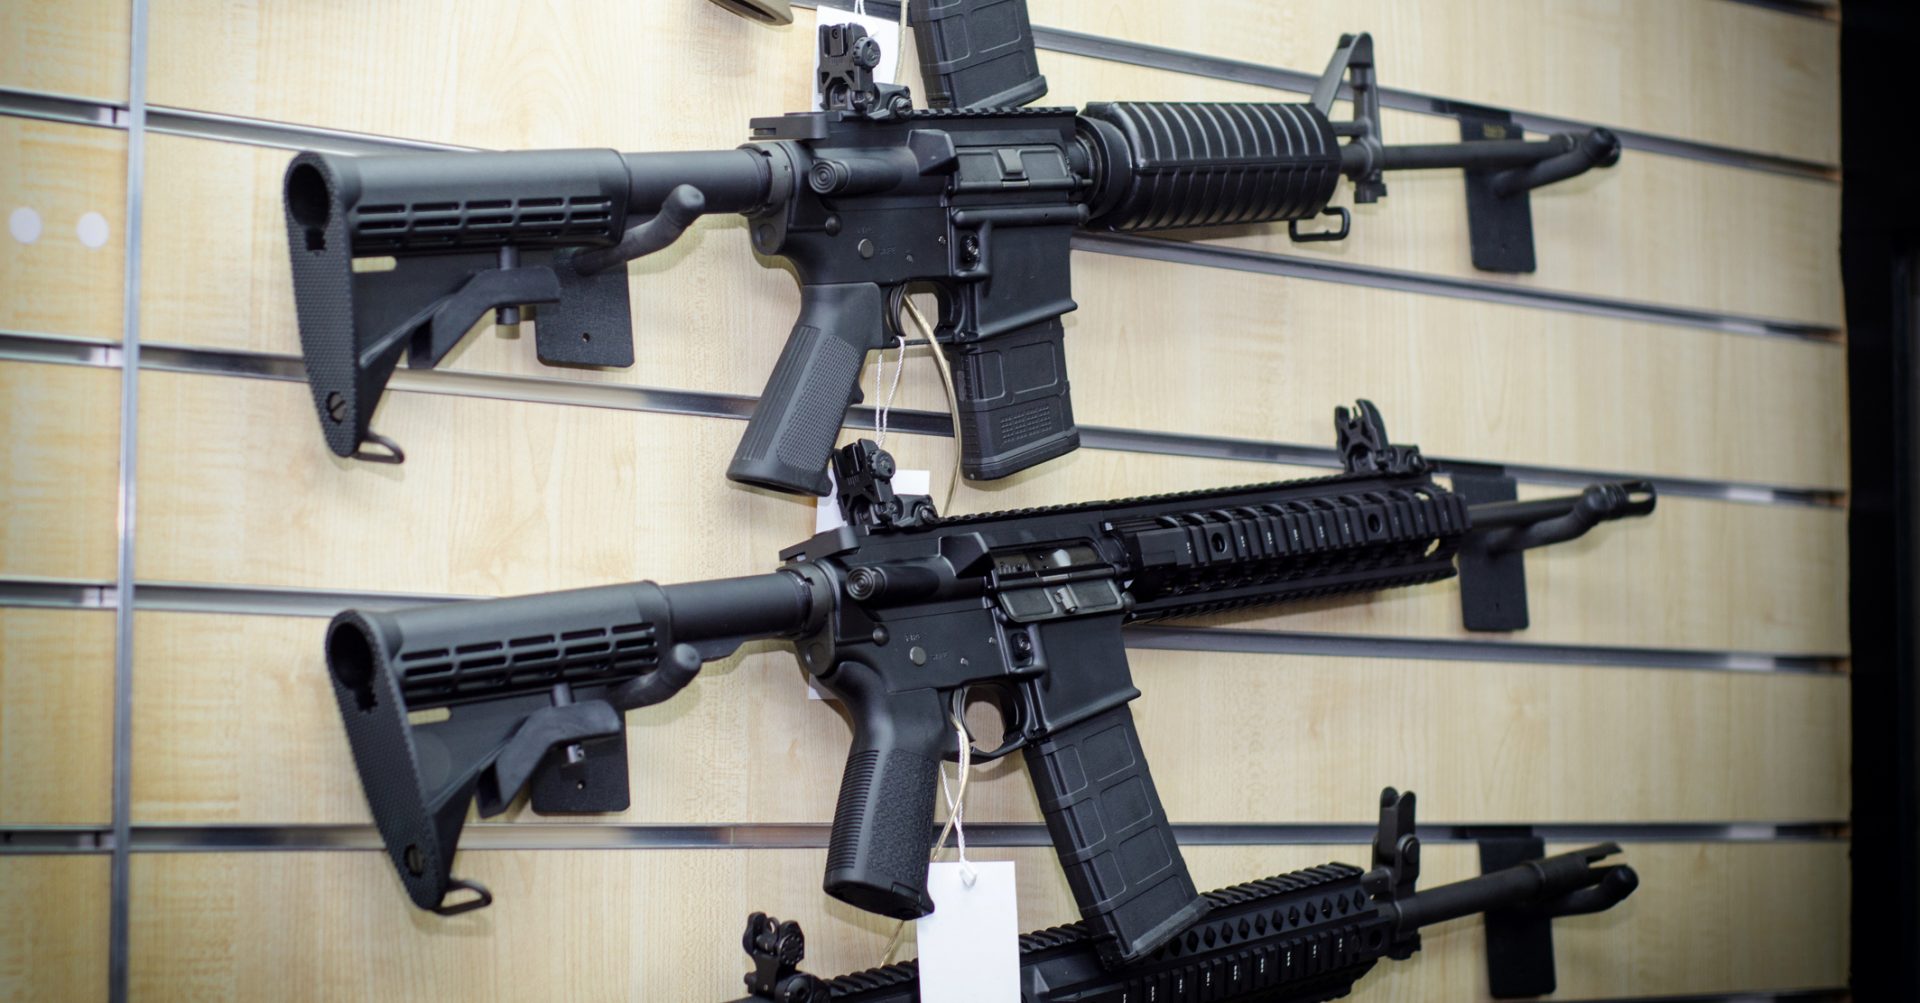 Gun wall rack with AR-15 style rifles.